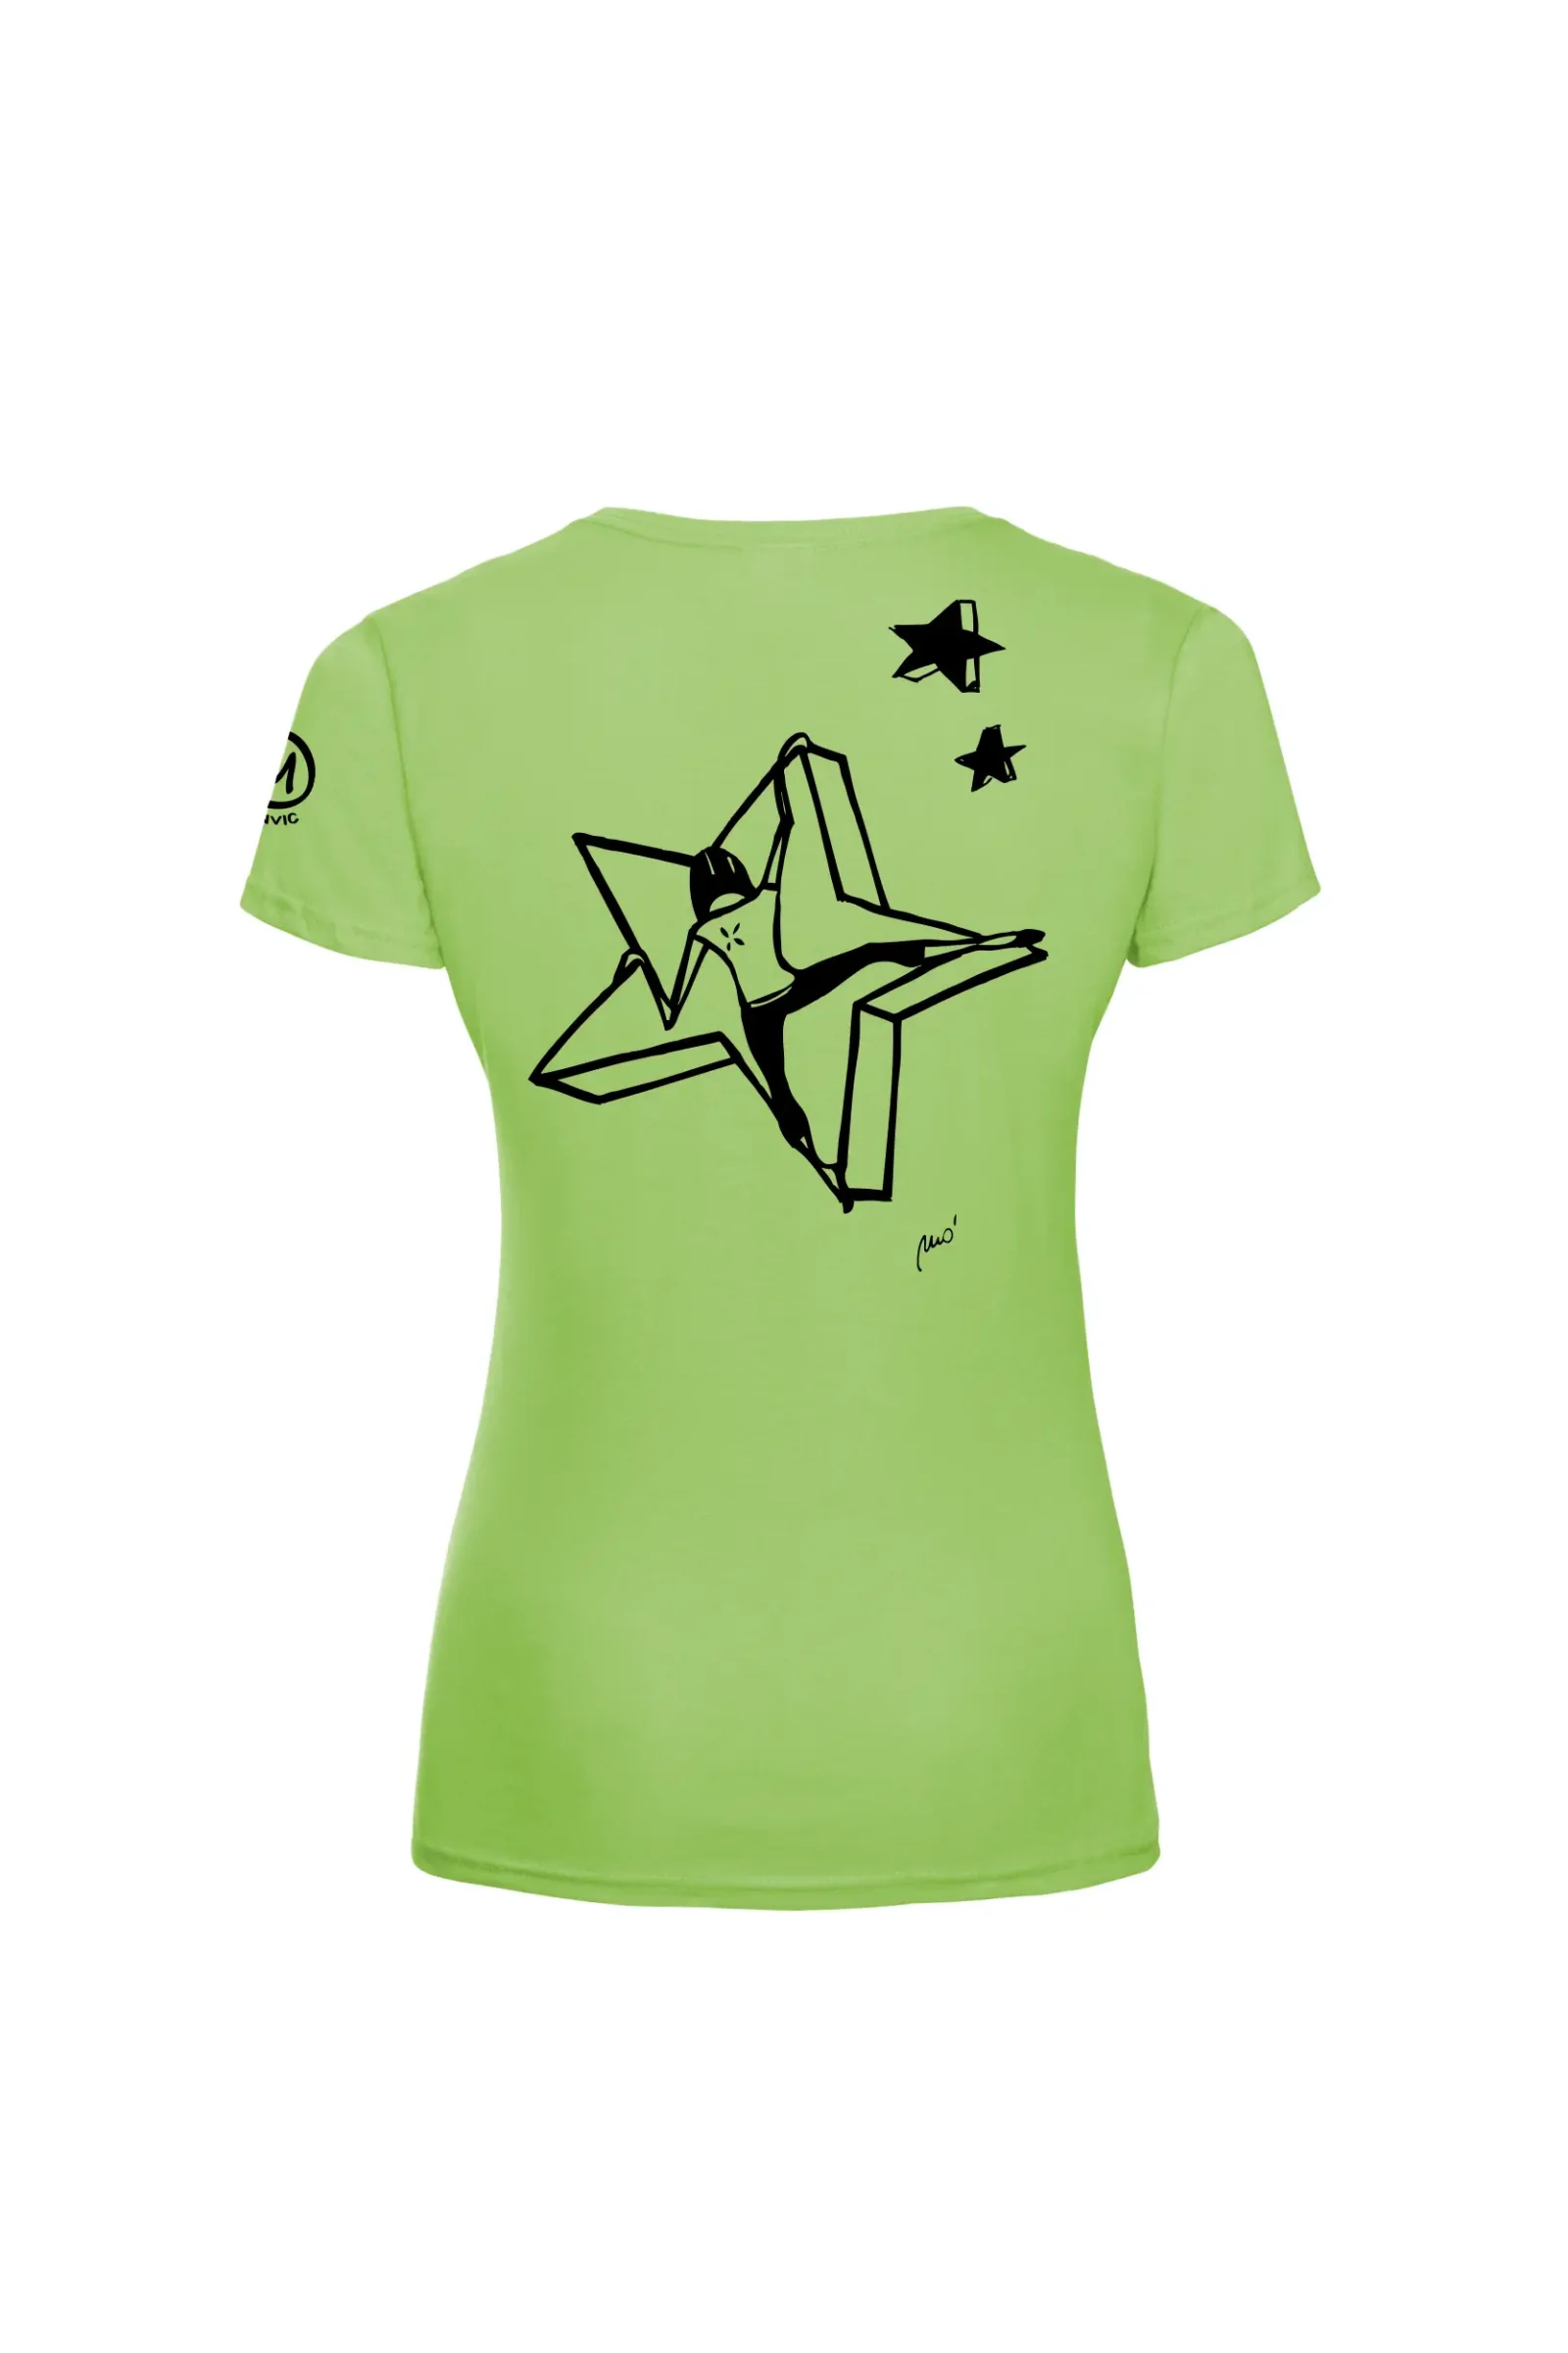 Women's climbing t-shirt - lime green cotton - "Azi" graphic - SHARON by MONVIC